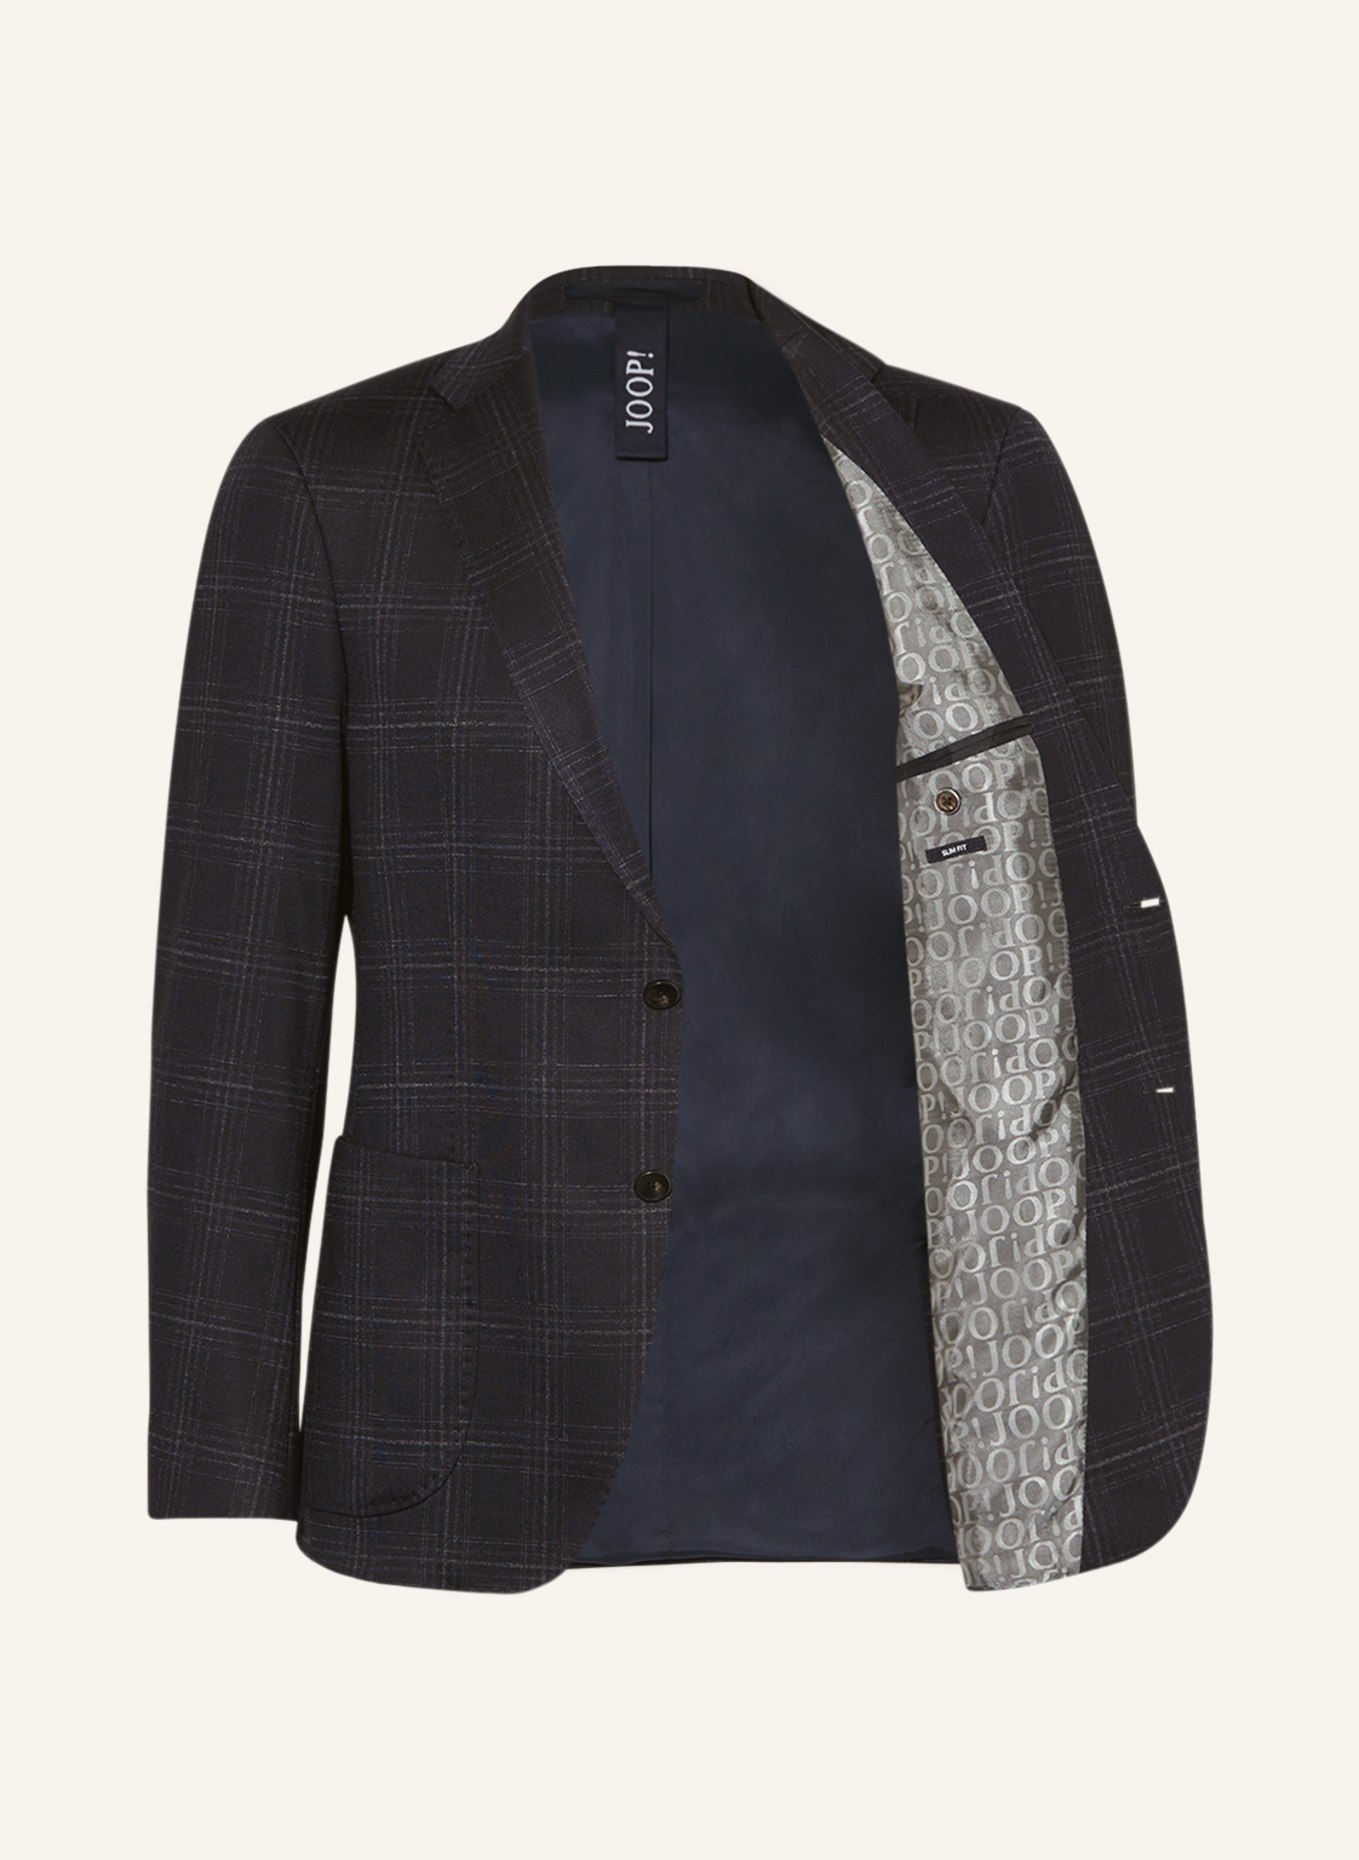 JOOP! Suit jacket HUSTLE slim fit in jersey, Color: 405 Dark Blue                  405 (Image 4)